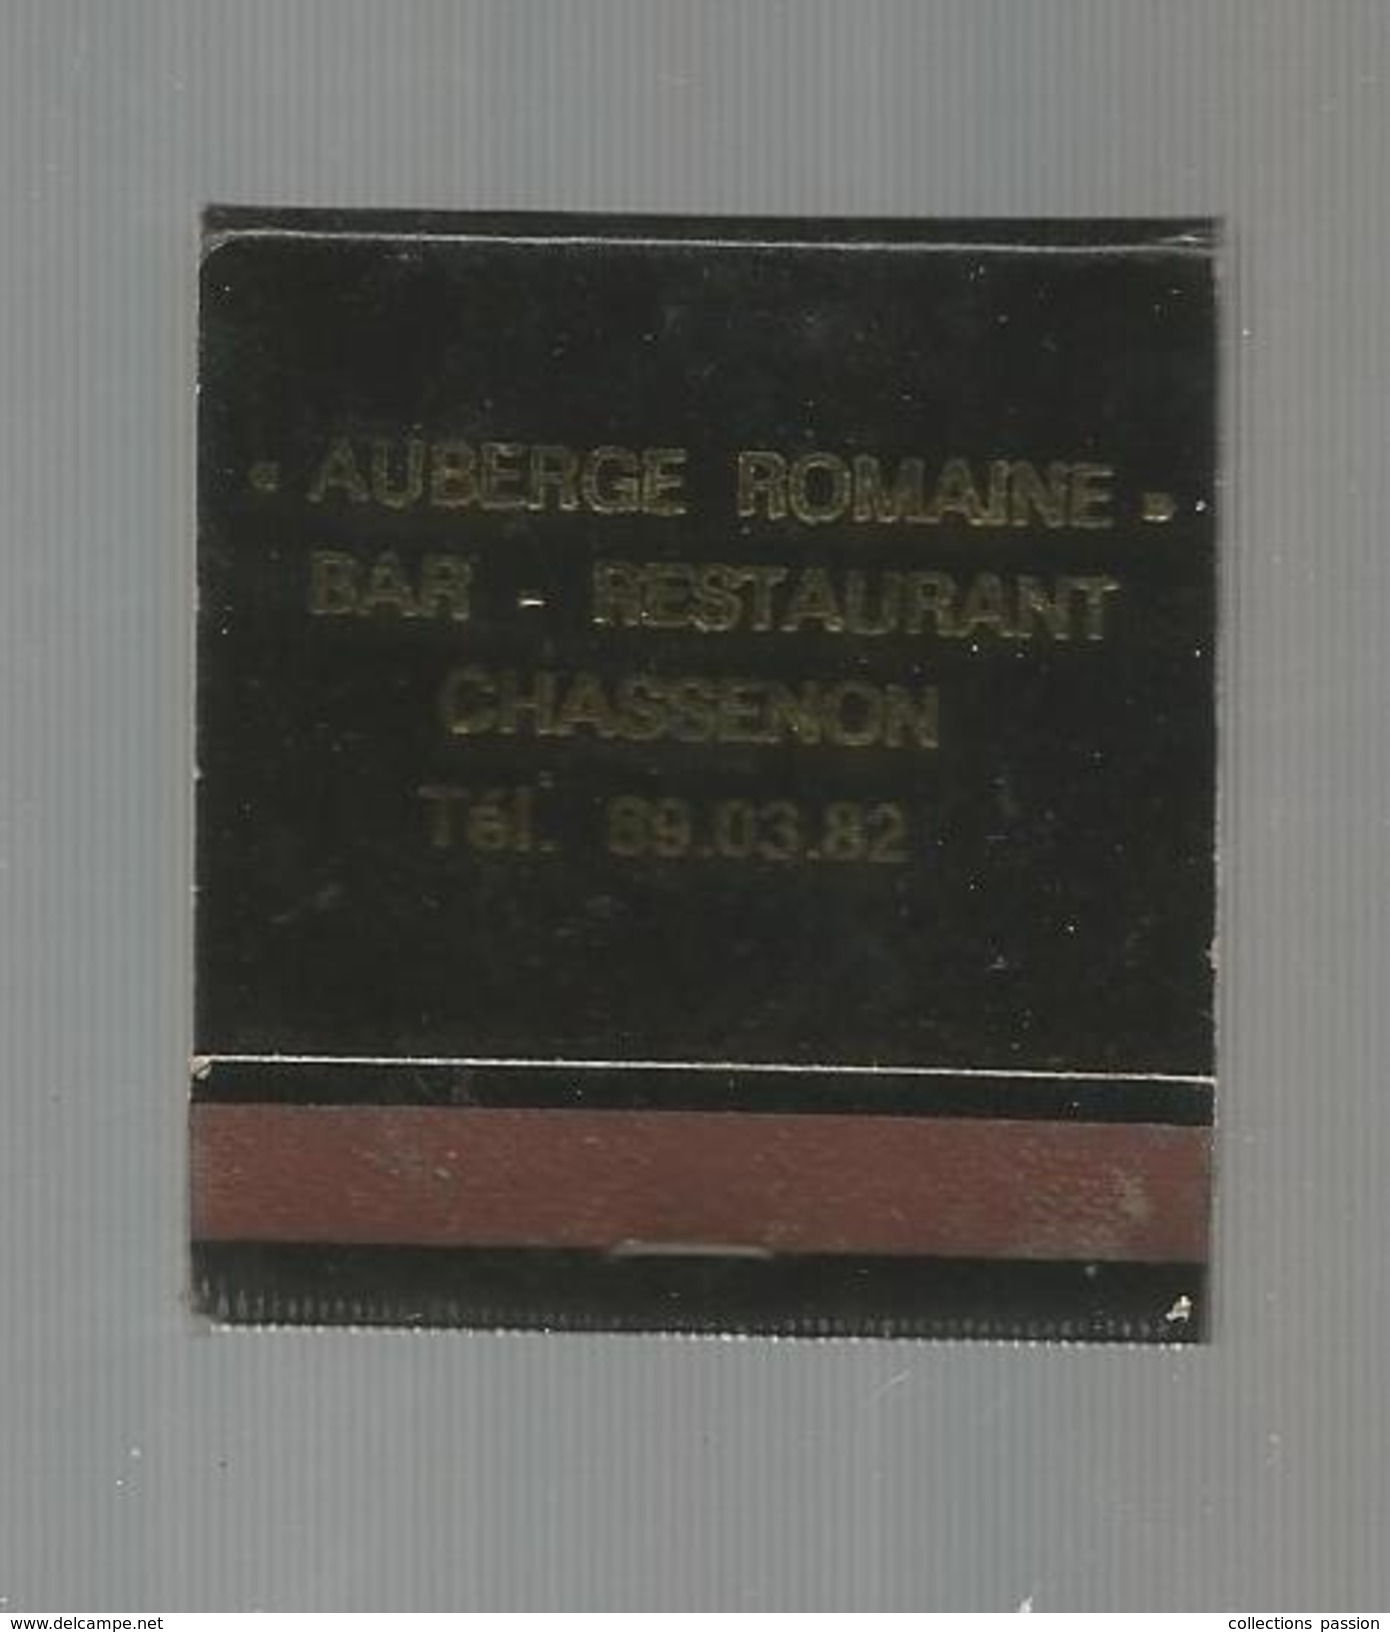 G-I-E , Tabac , Boites , Pochette D'ALLUMETTES , Publicité , AUBERGE ROMAINE , Bar , Restaurant , CHASSENON , Charente - Zündholzschachteln